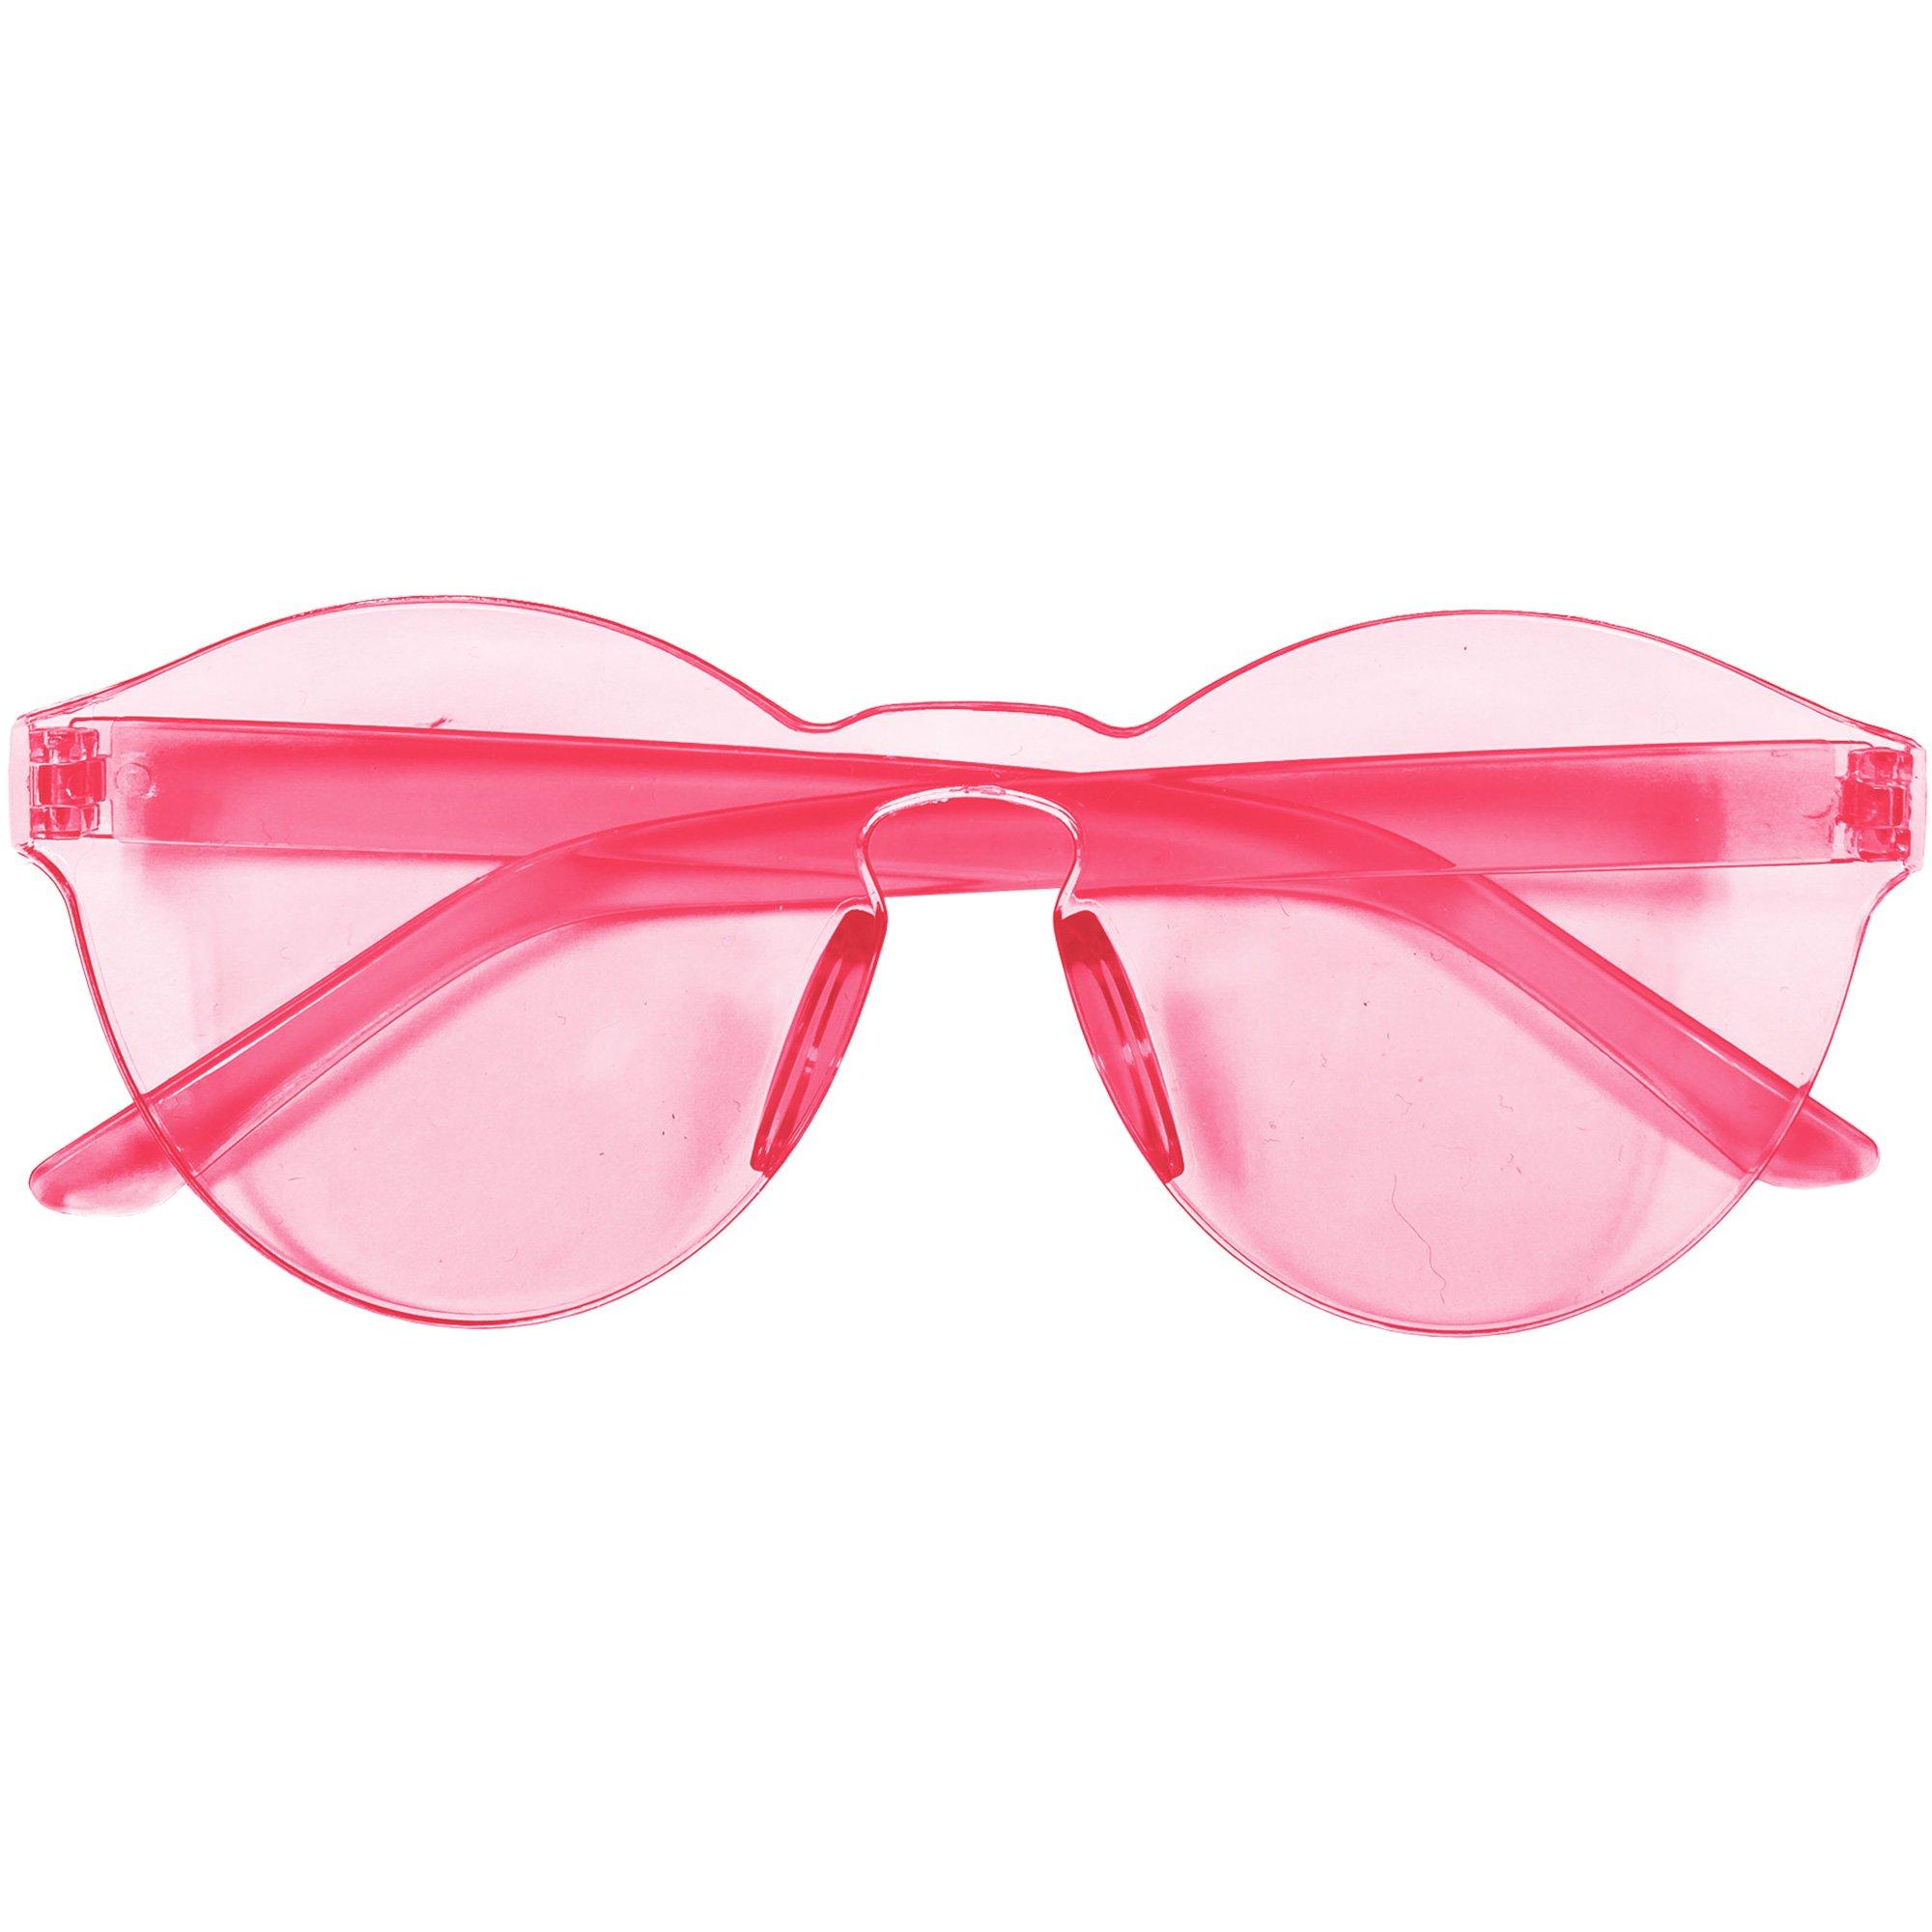 Plastic Rimless Sunglasses, 5.5in x 2.2in